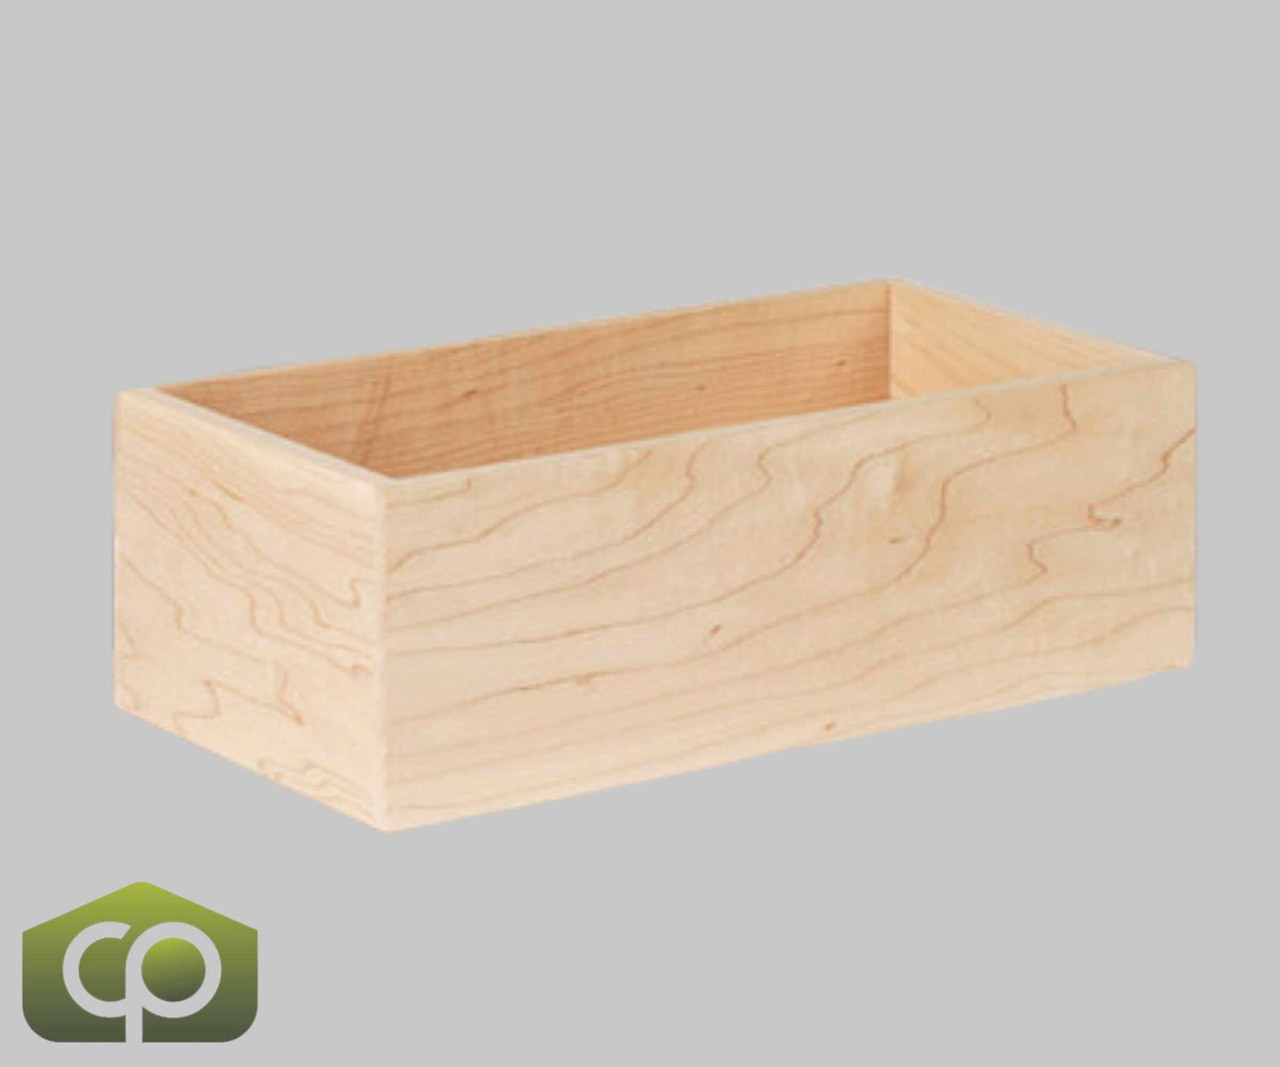 Cal-Mil Blonde 6" x 9" x 4" Maple Wood Merchandiser Box - Natural Elegance for Display